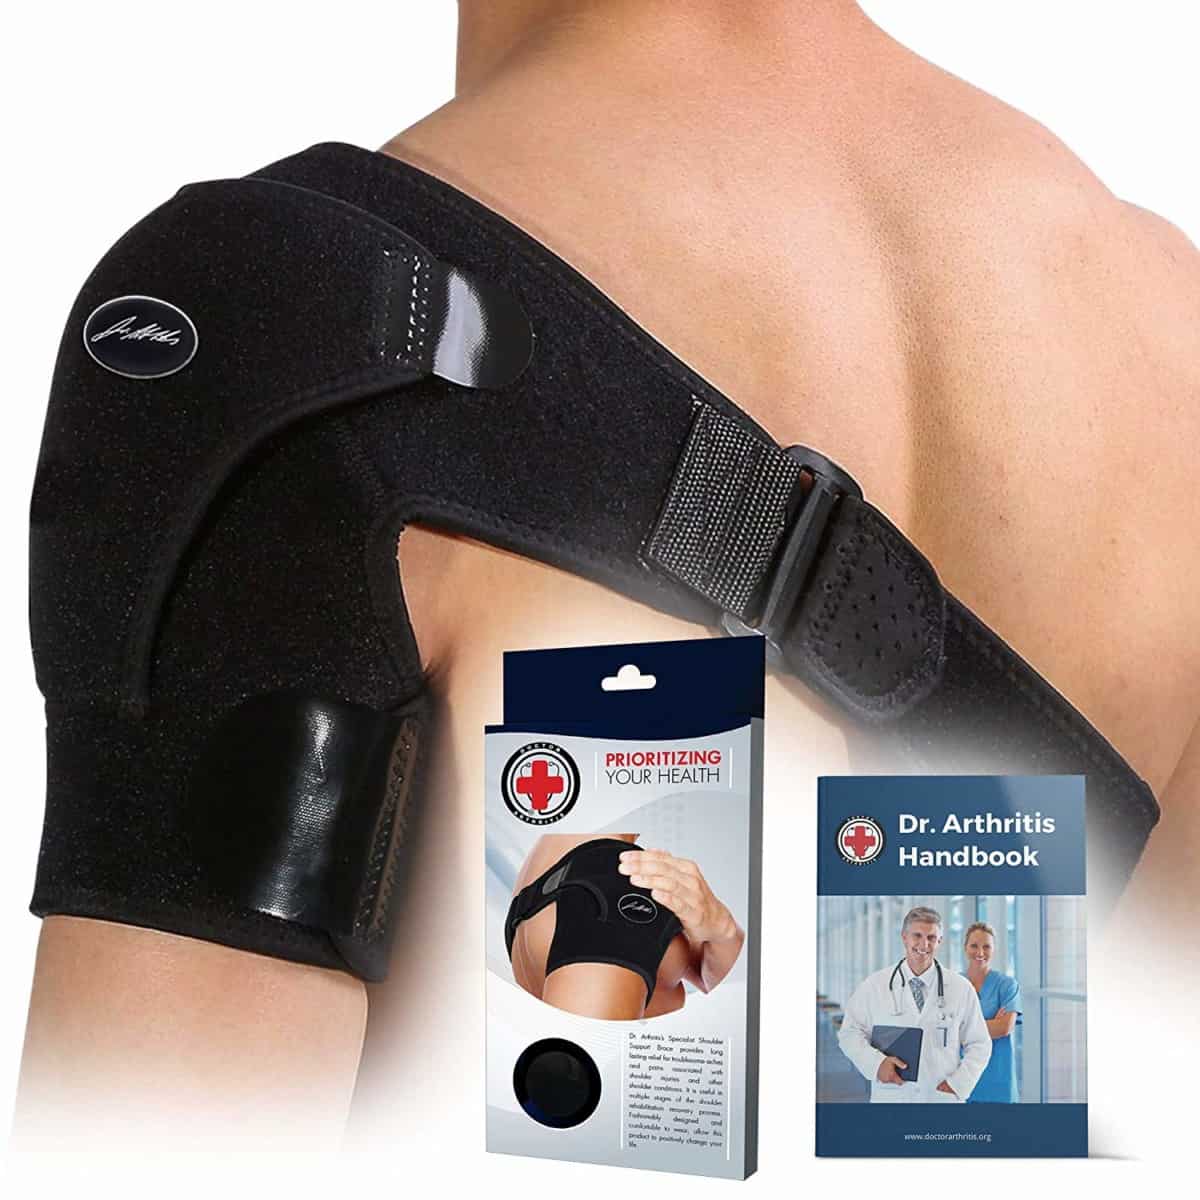 Shoulder Support Brace & Dr. Arthritis Handbook - Dr. Arthritis